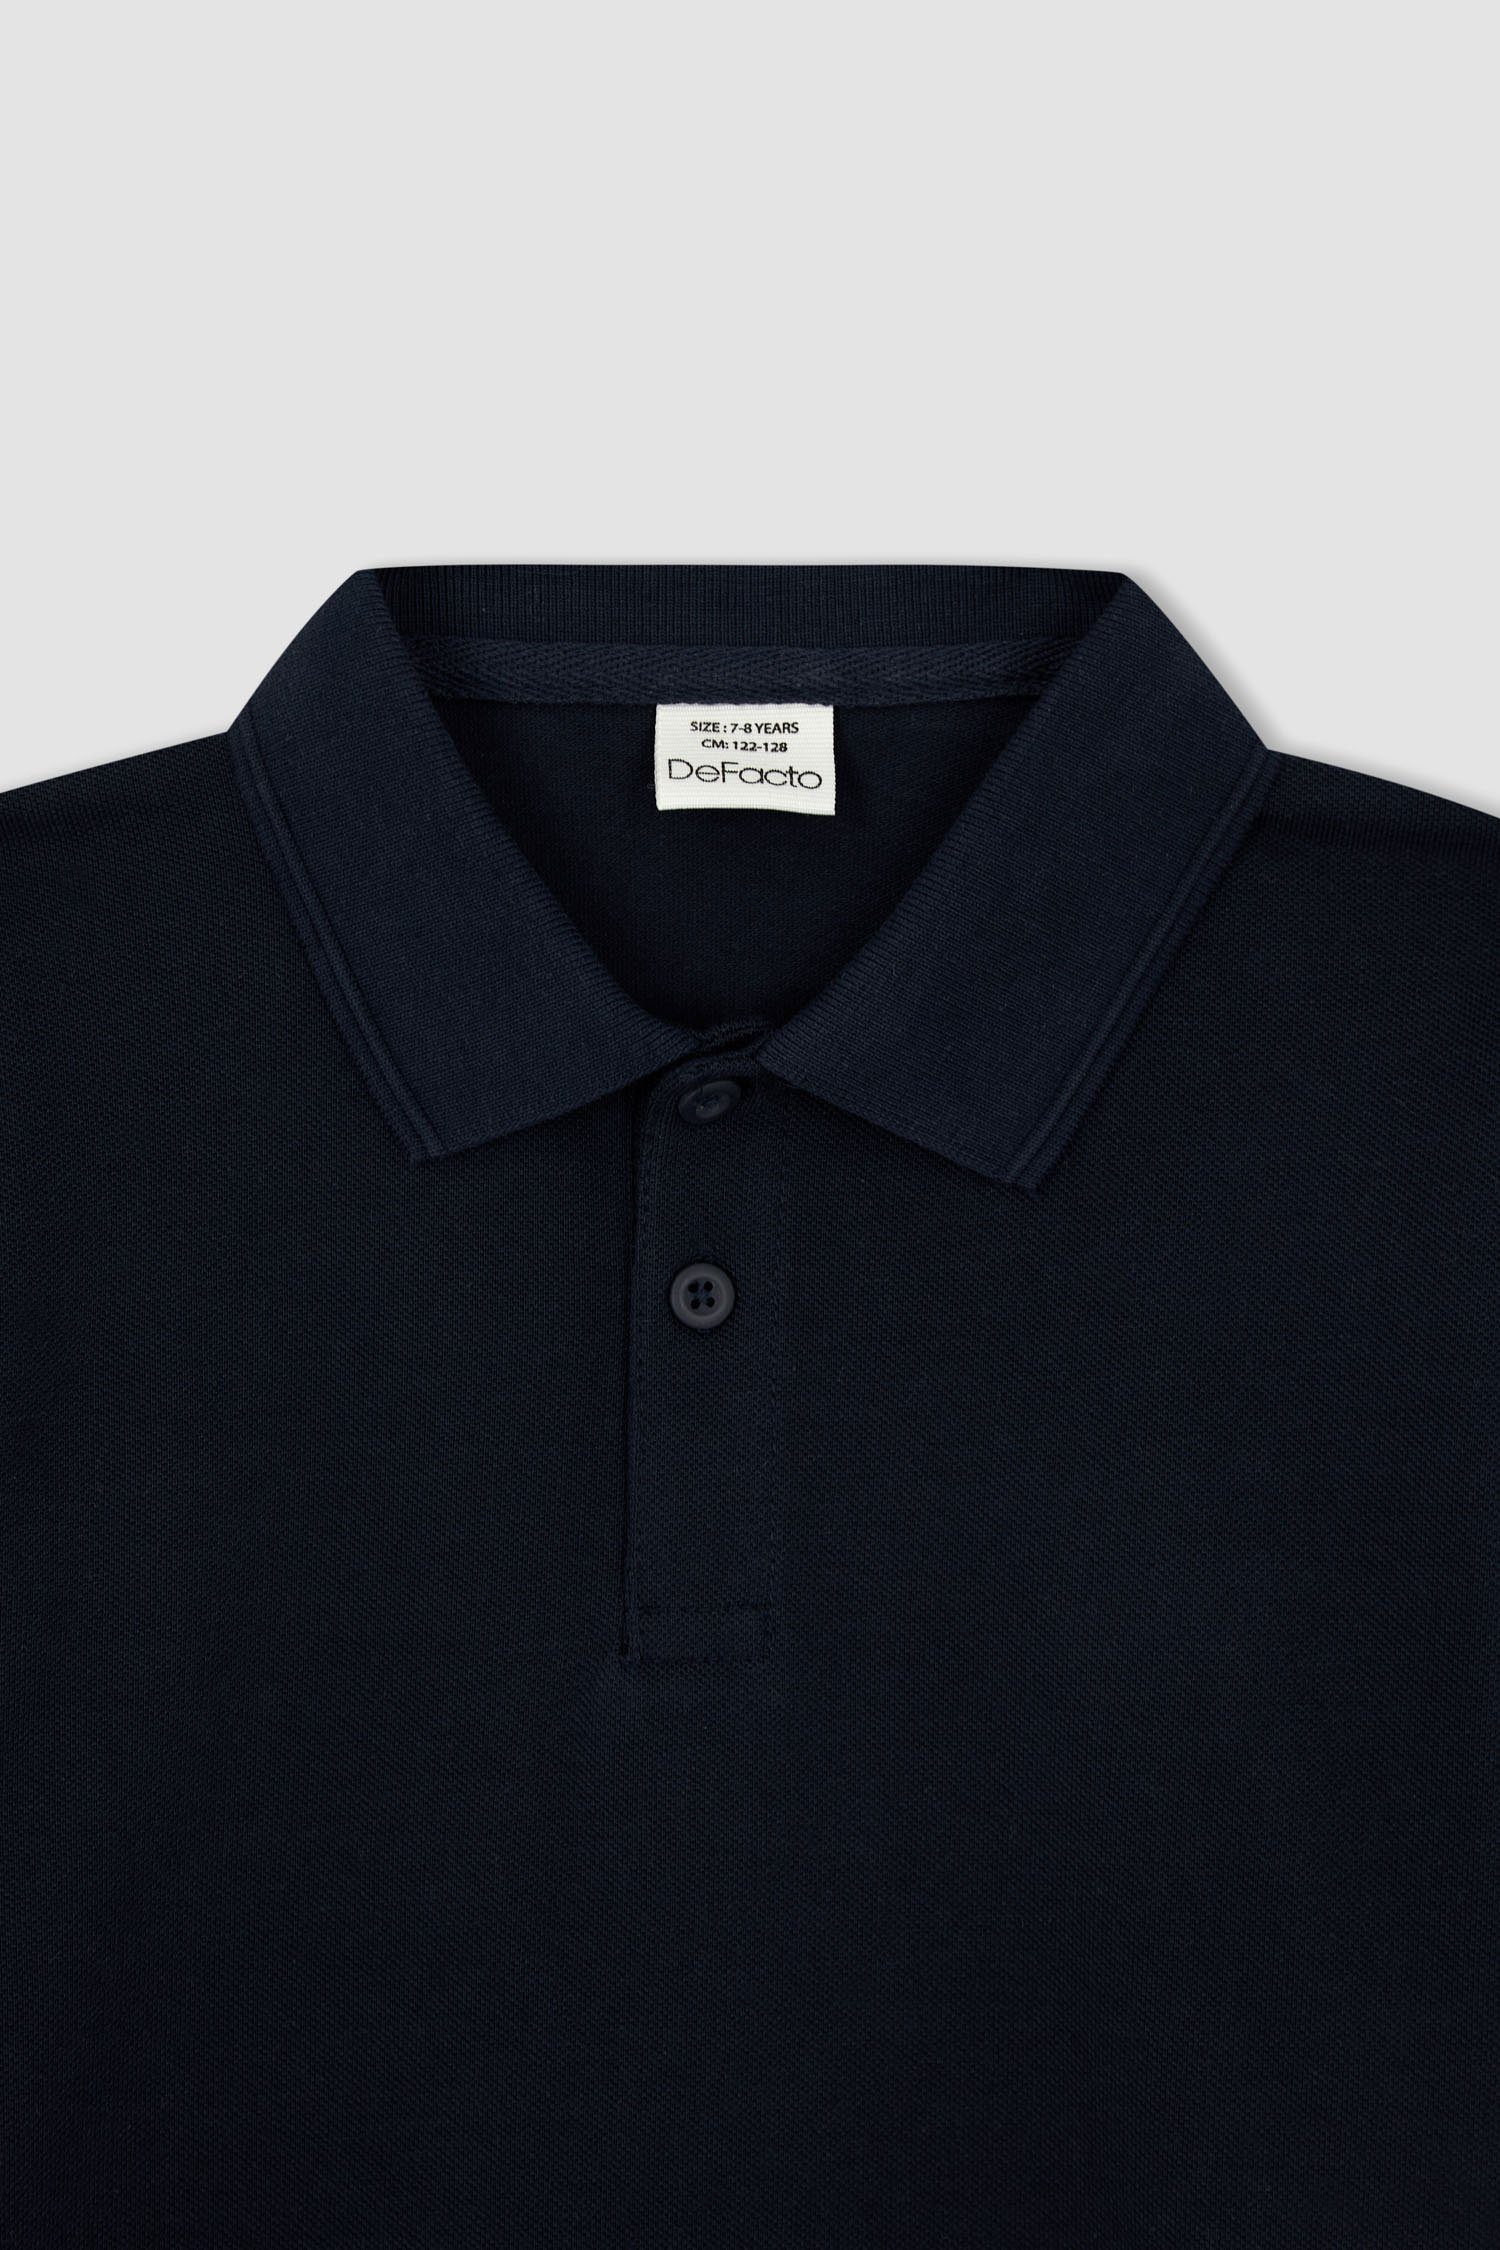 Polo DeFacto REGULAR FIT Jungen Marineblau Langarm-Poloshirt T-Shirt